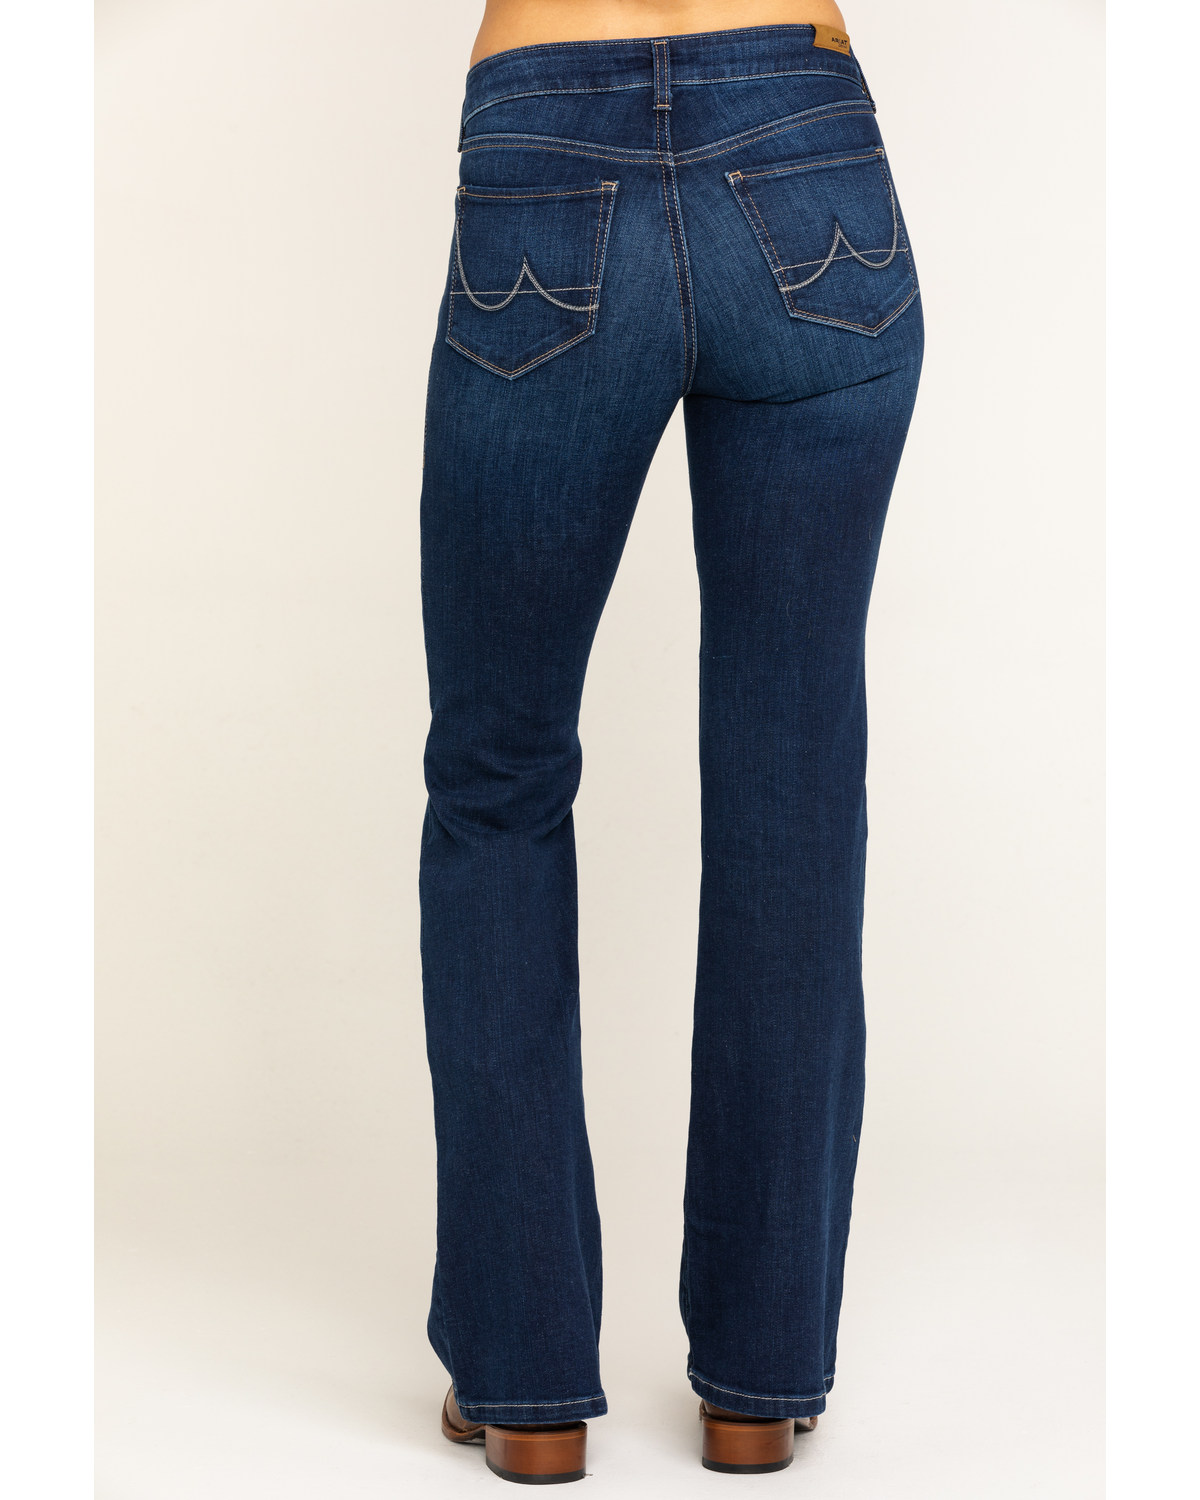 Ariat Jeans Size Chart Australia